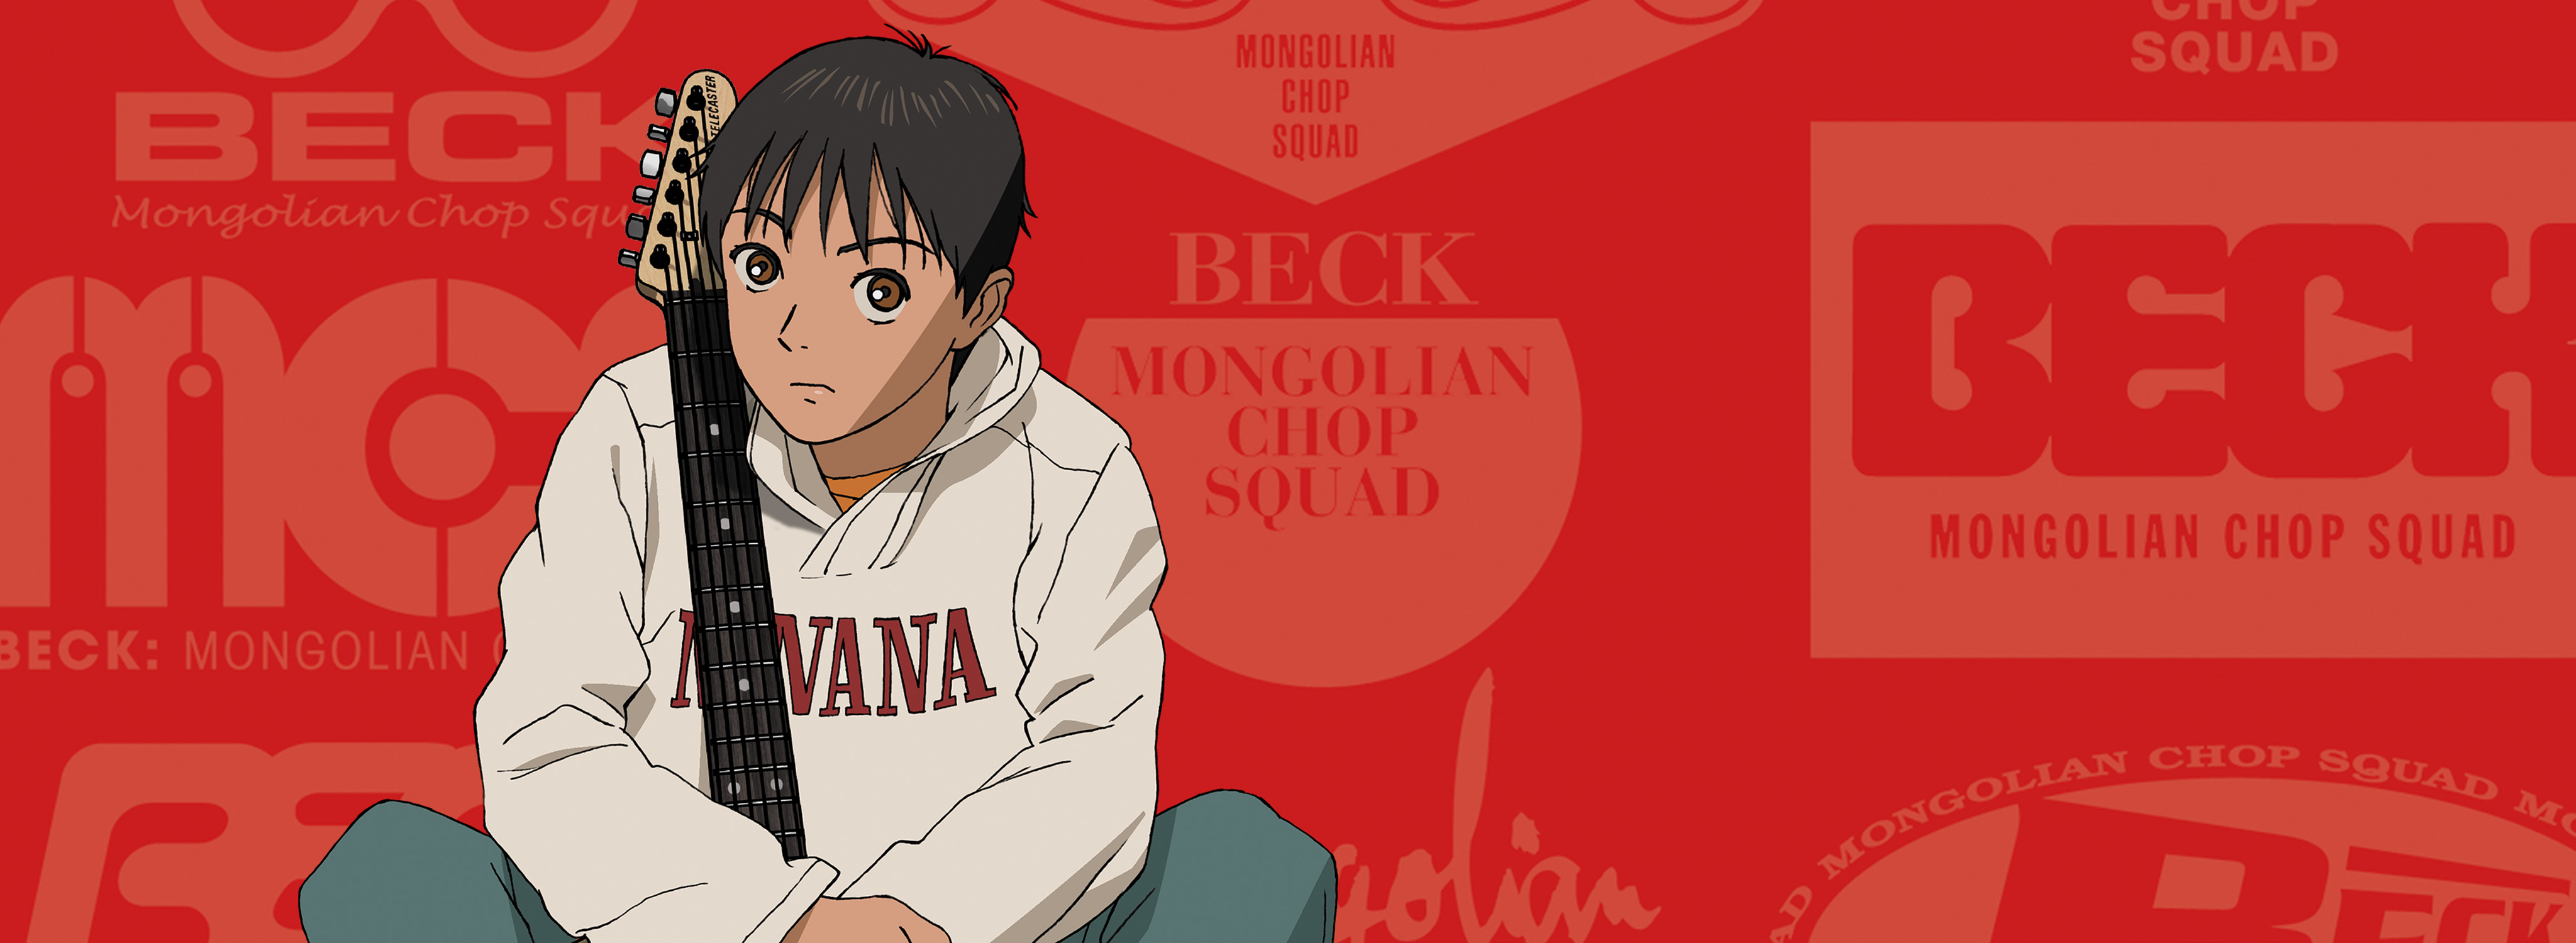 Beck Manga Guitar Anime Boys Wallpaper - Resolution:3840x2160 - ID:1181046  - wallha.com